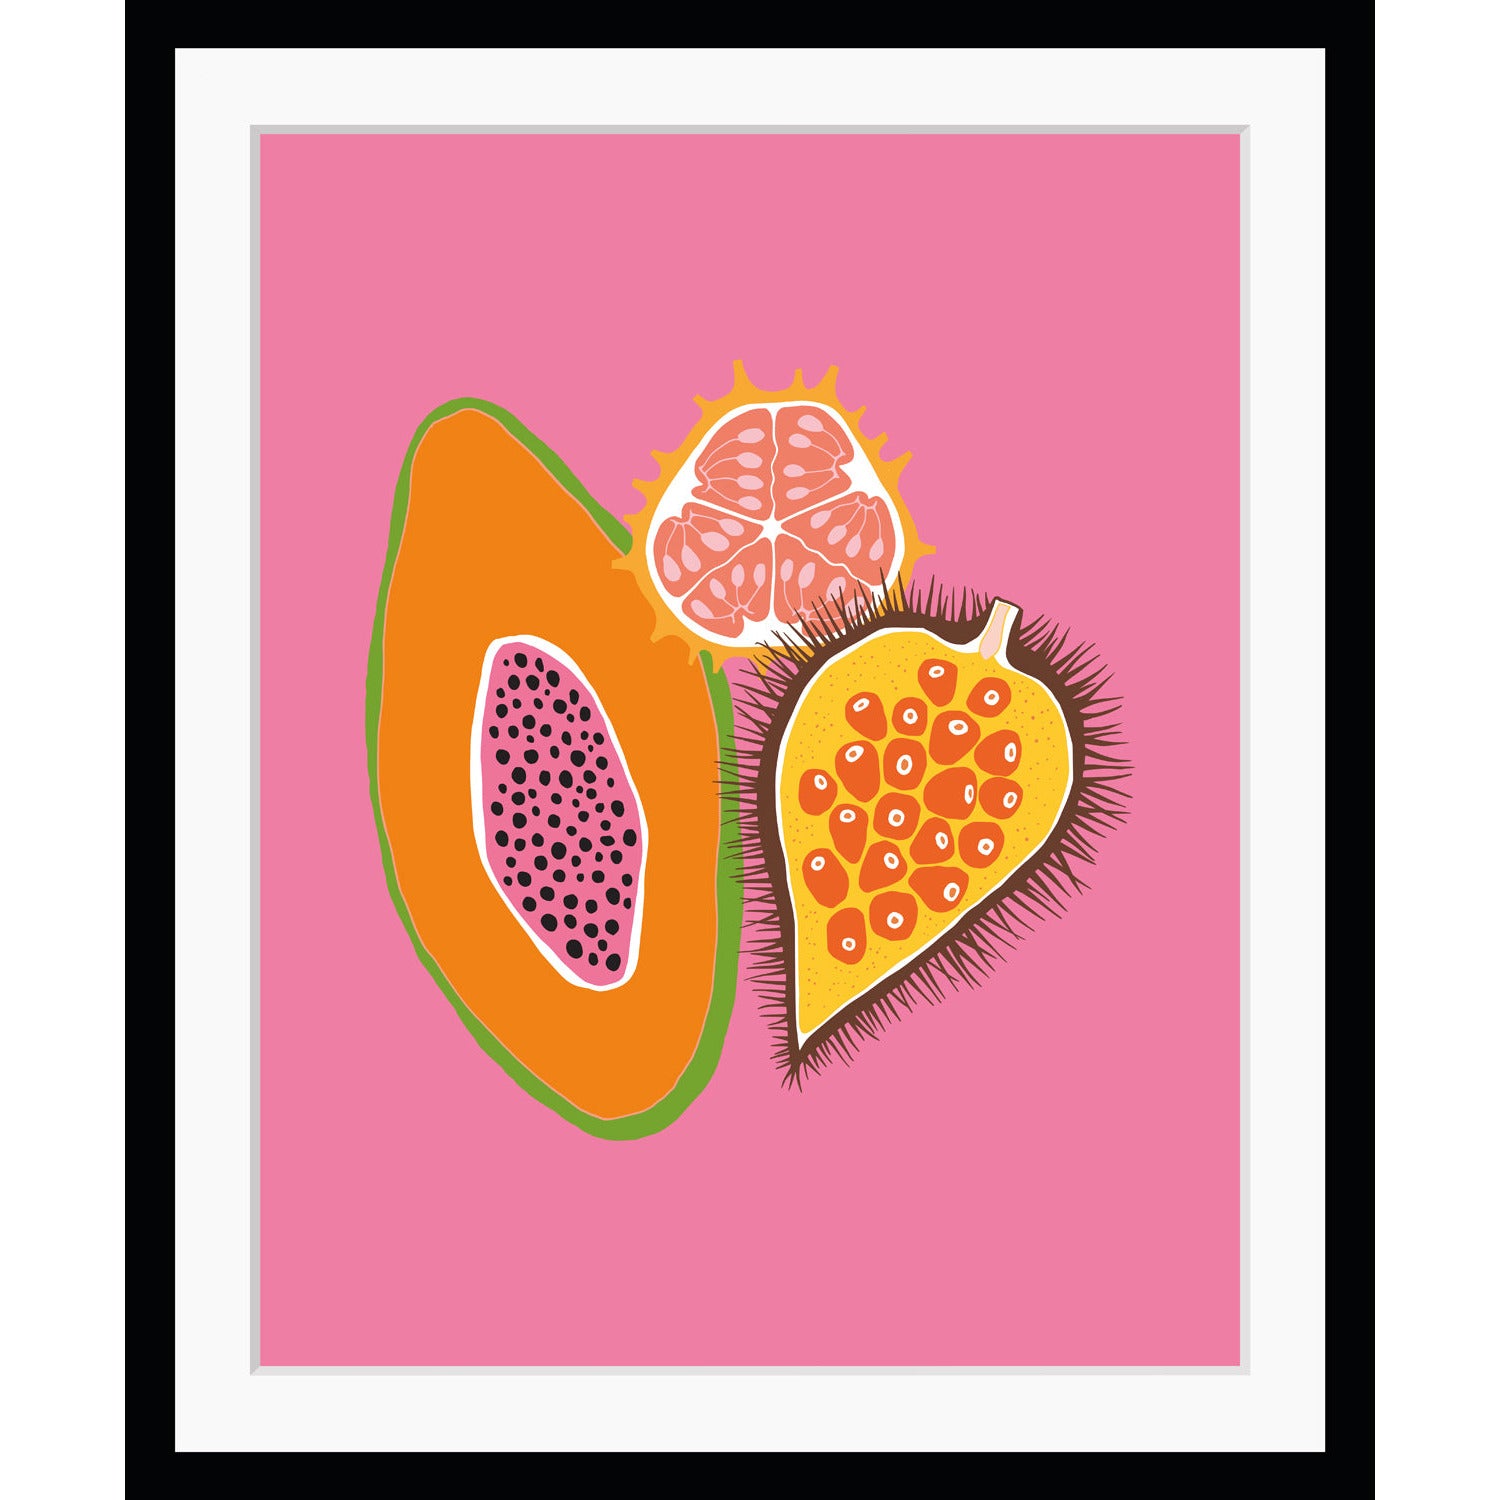 Rahmenbild - Big and Little Fruits